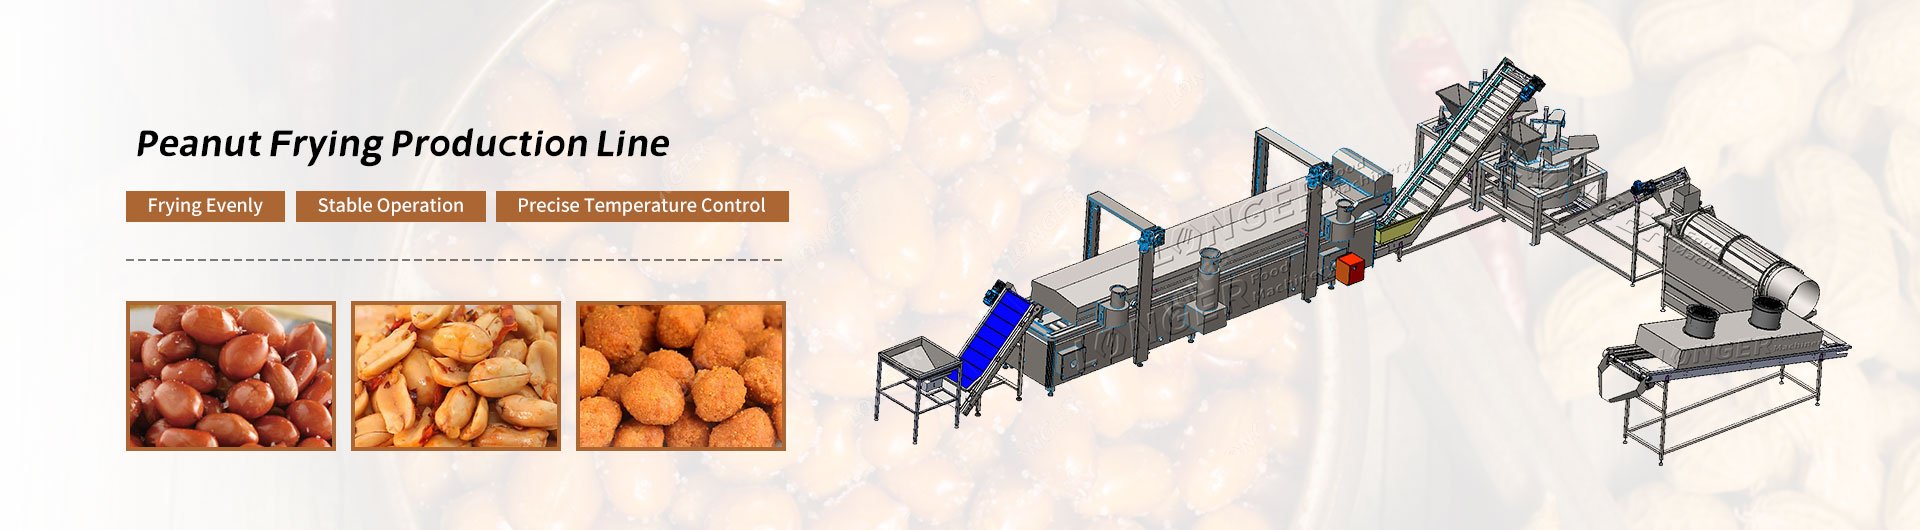 Peanut Frying Production Line